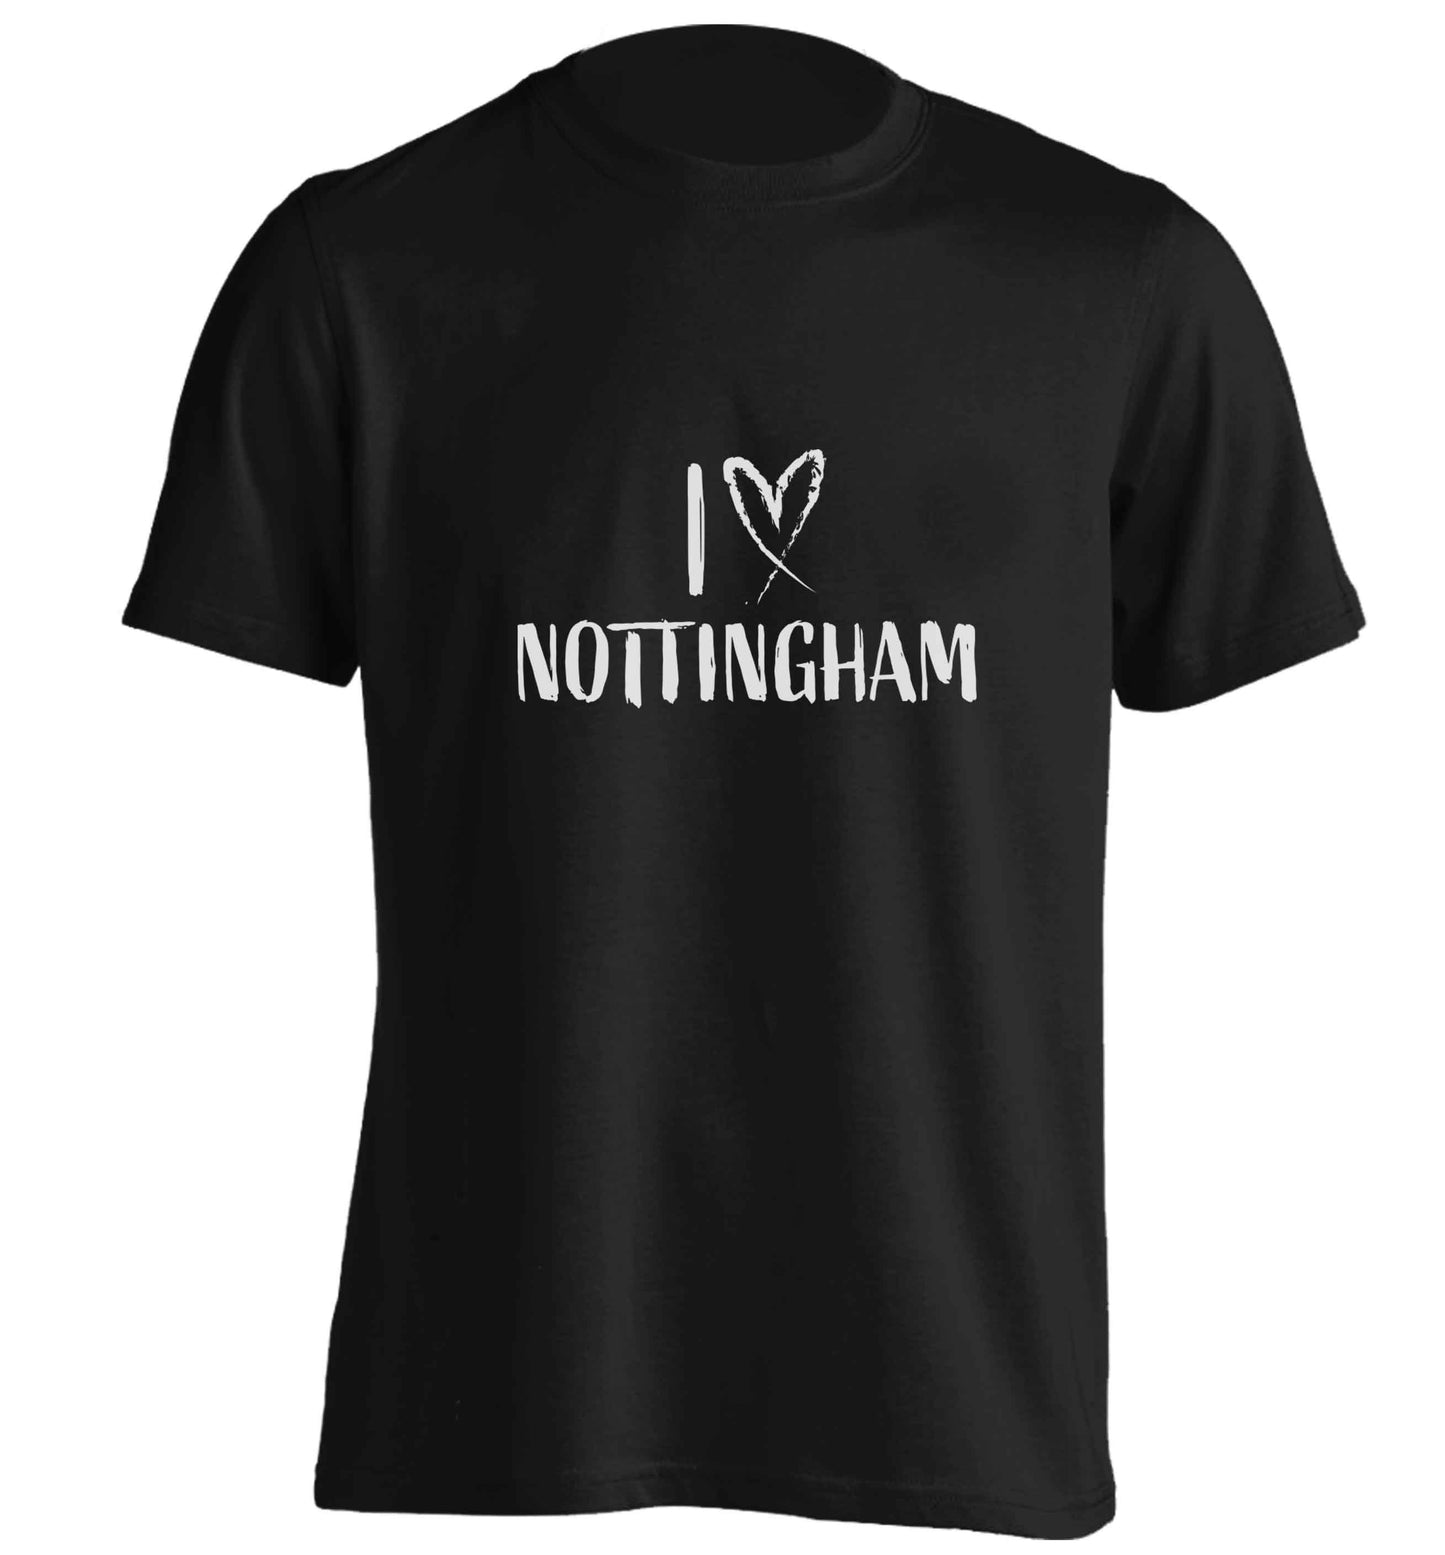 I love Nottingham adults unisex black Tshirt 2XL